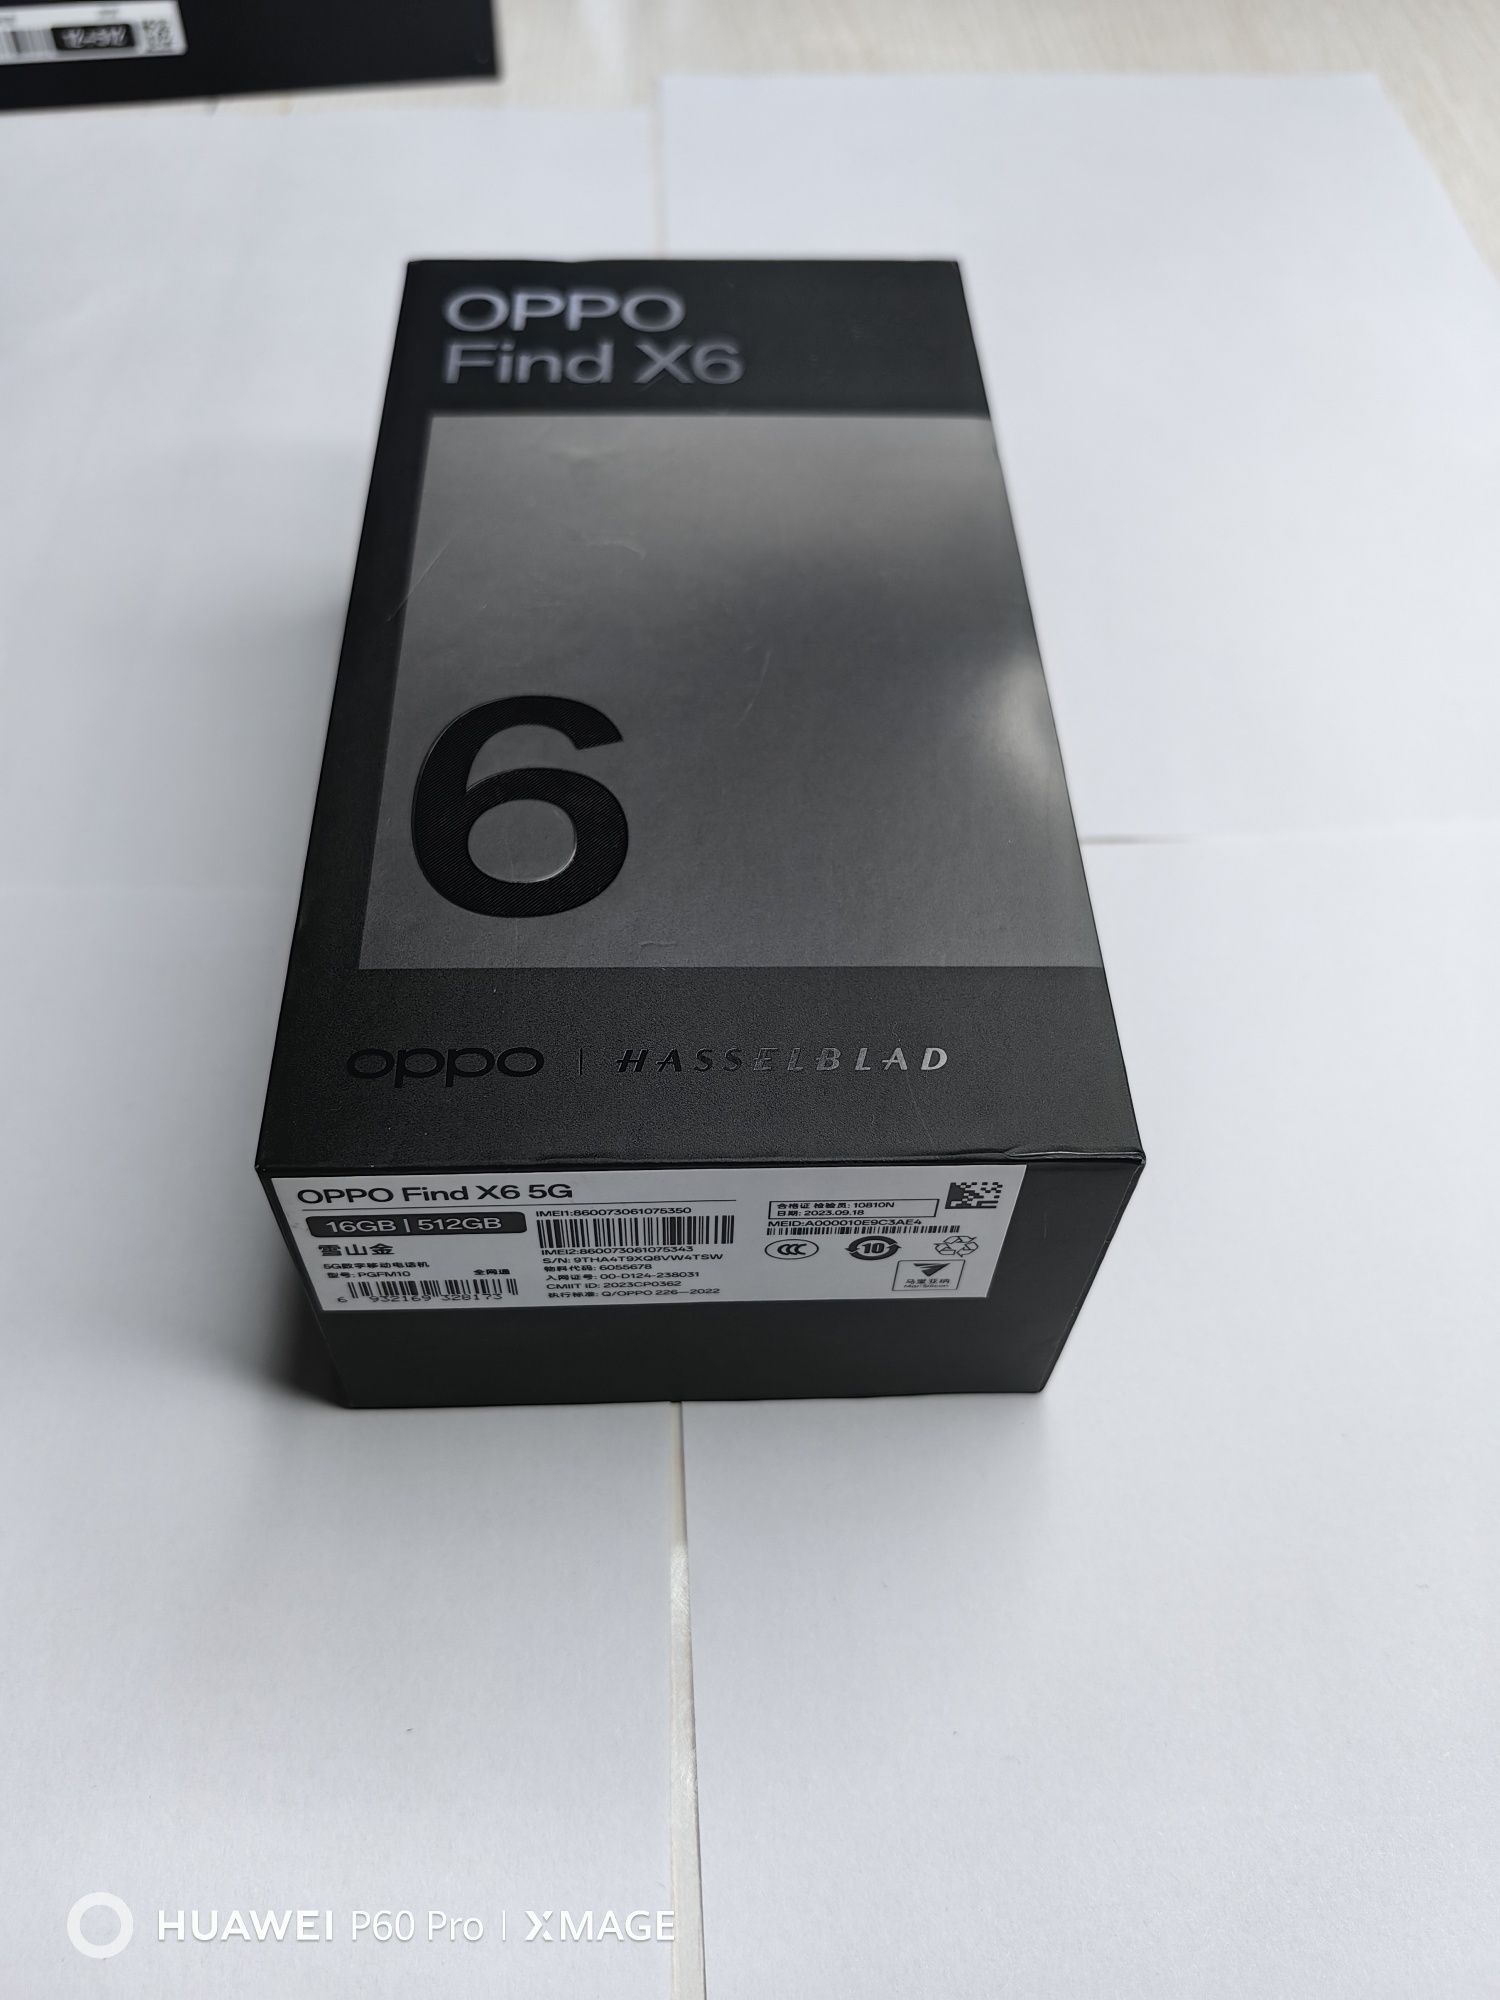 Oppo Find X6 512gb creme White